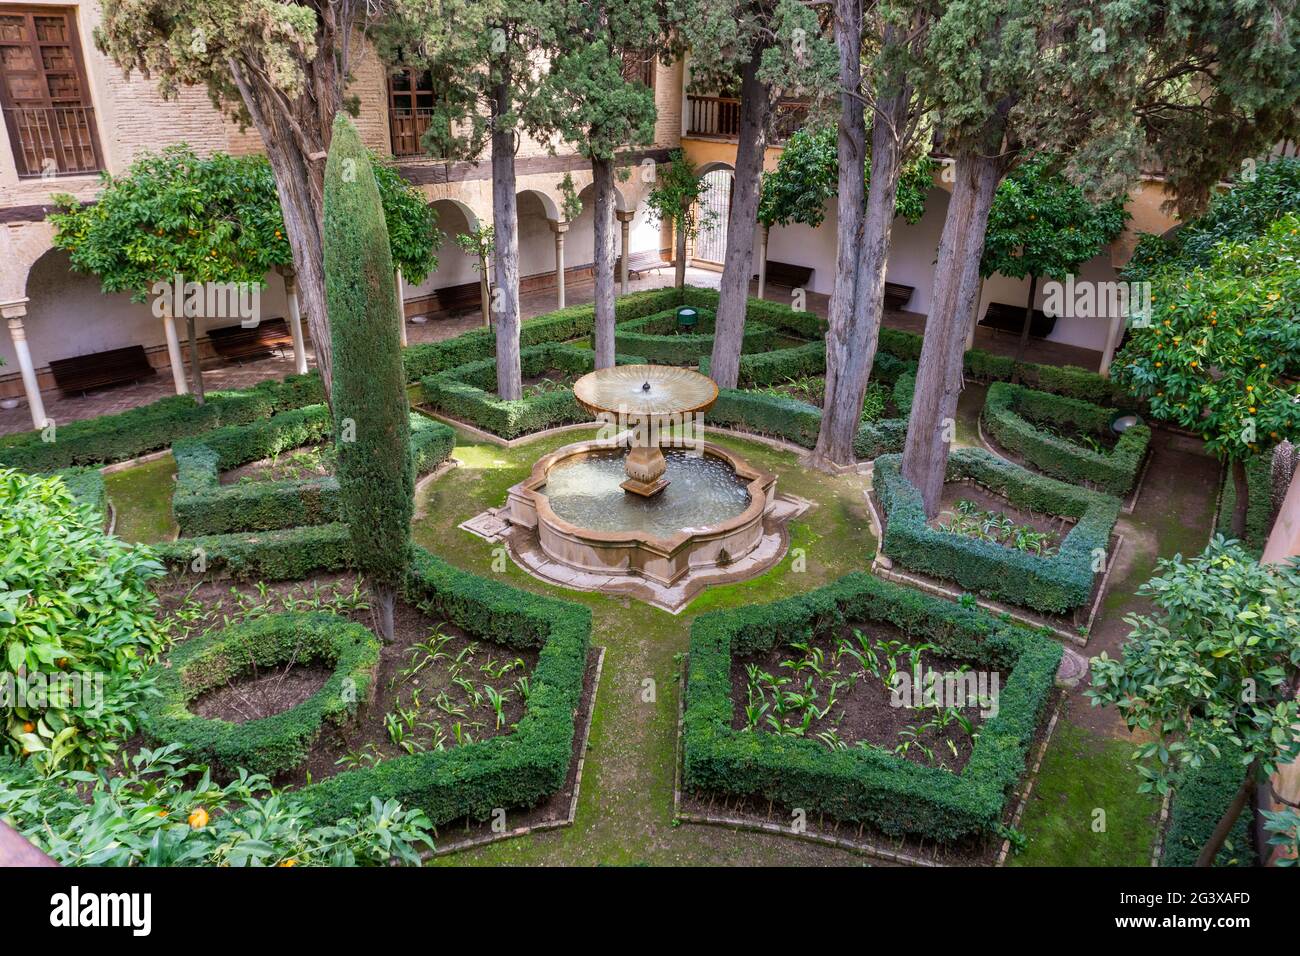 The Jardin de Lindaraja in the Nazaries Palace in the Alhambra in Granada Stock Photo